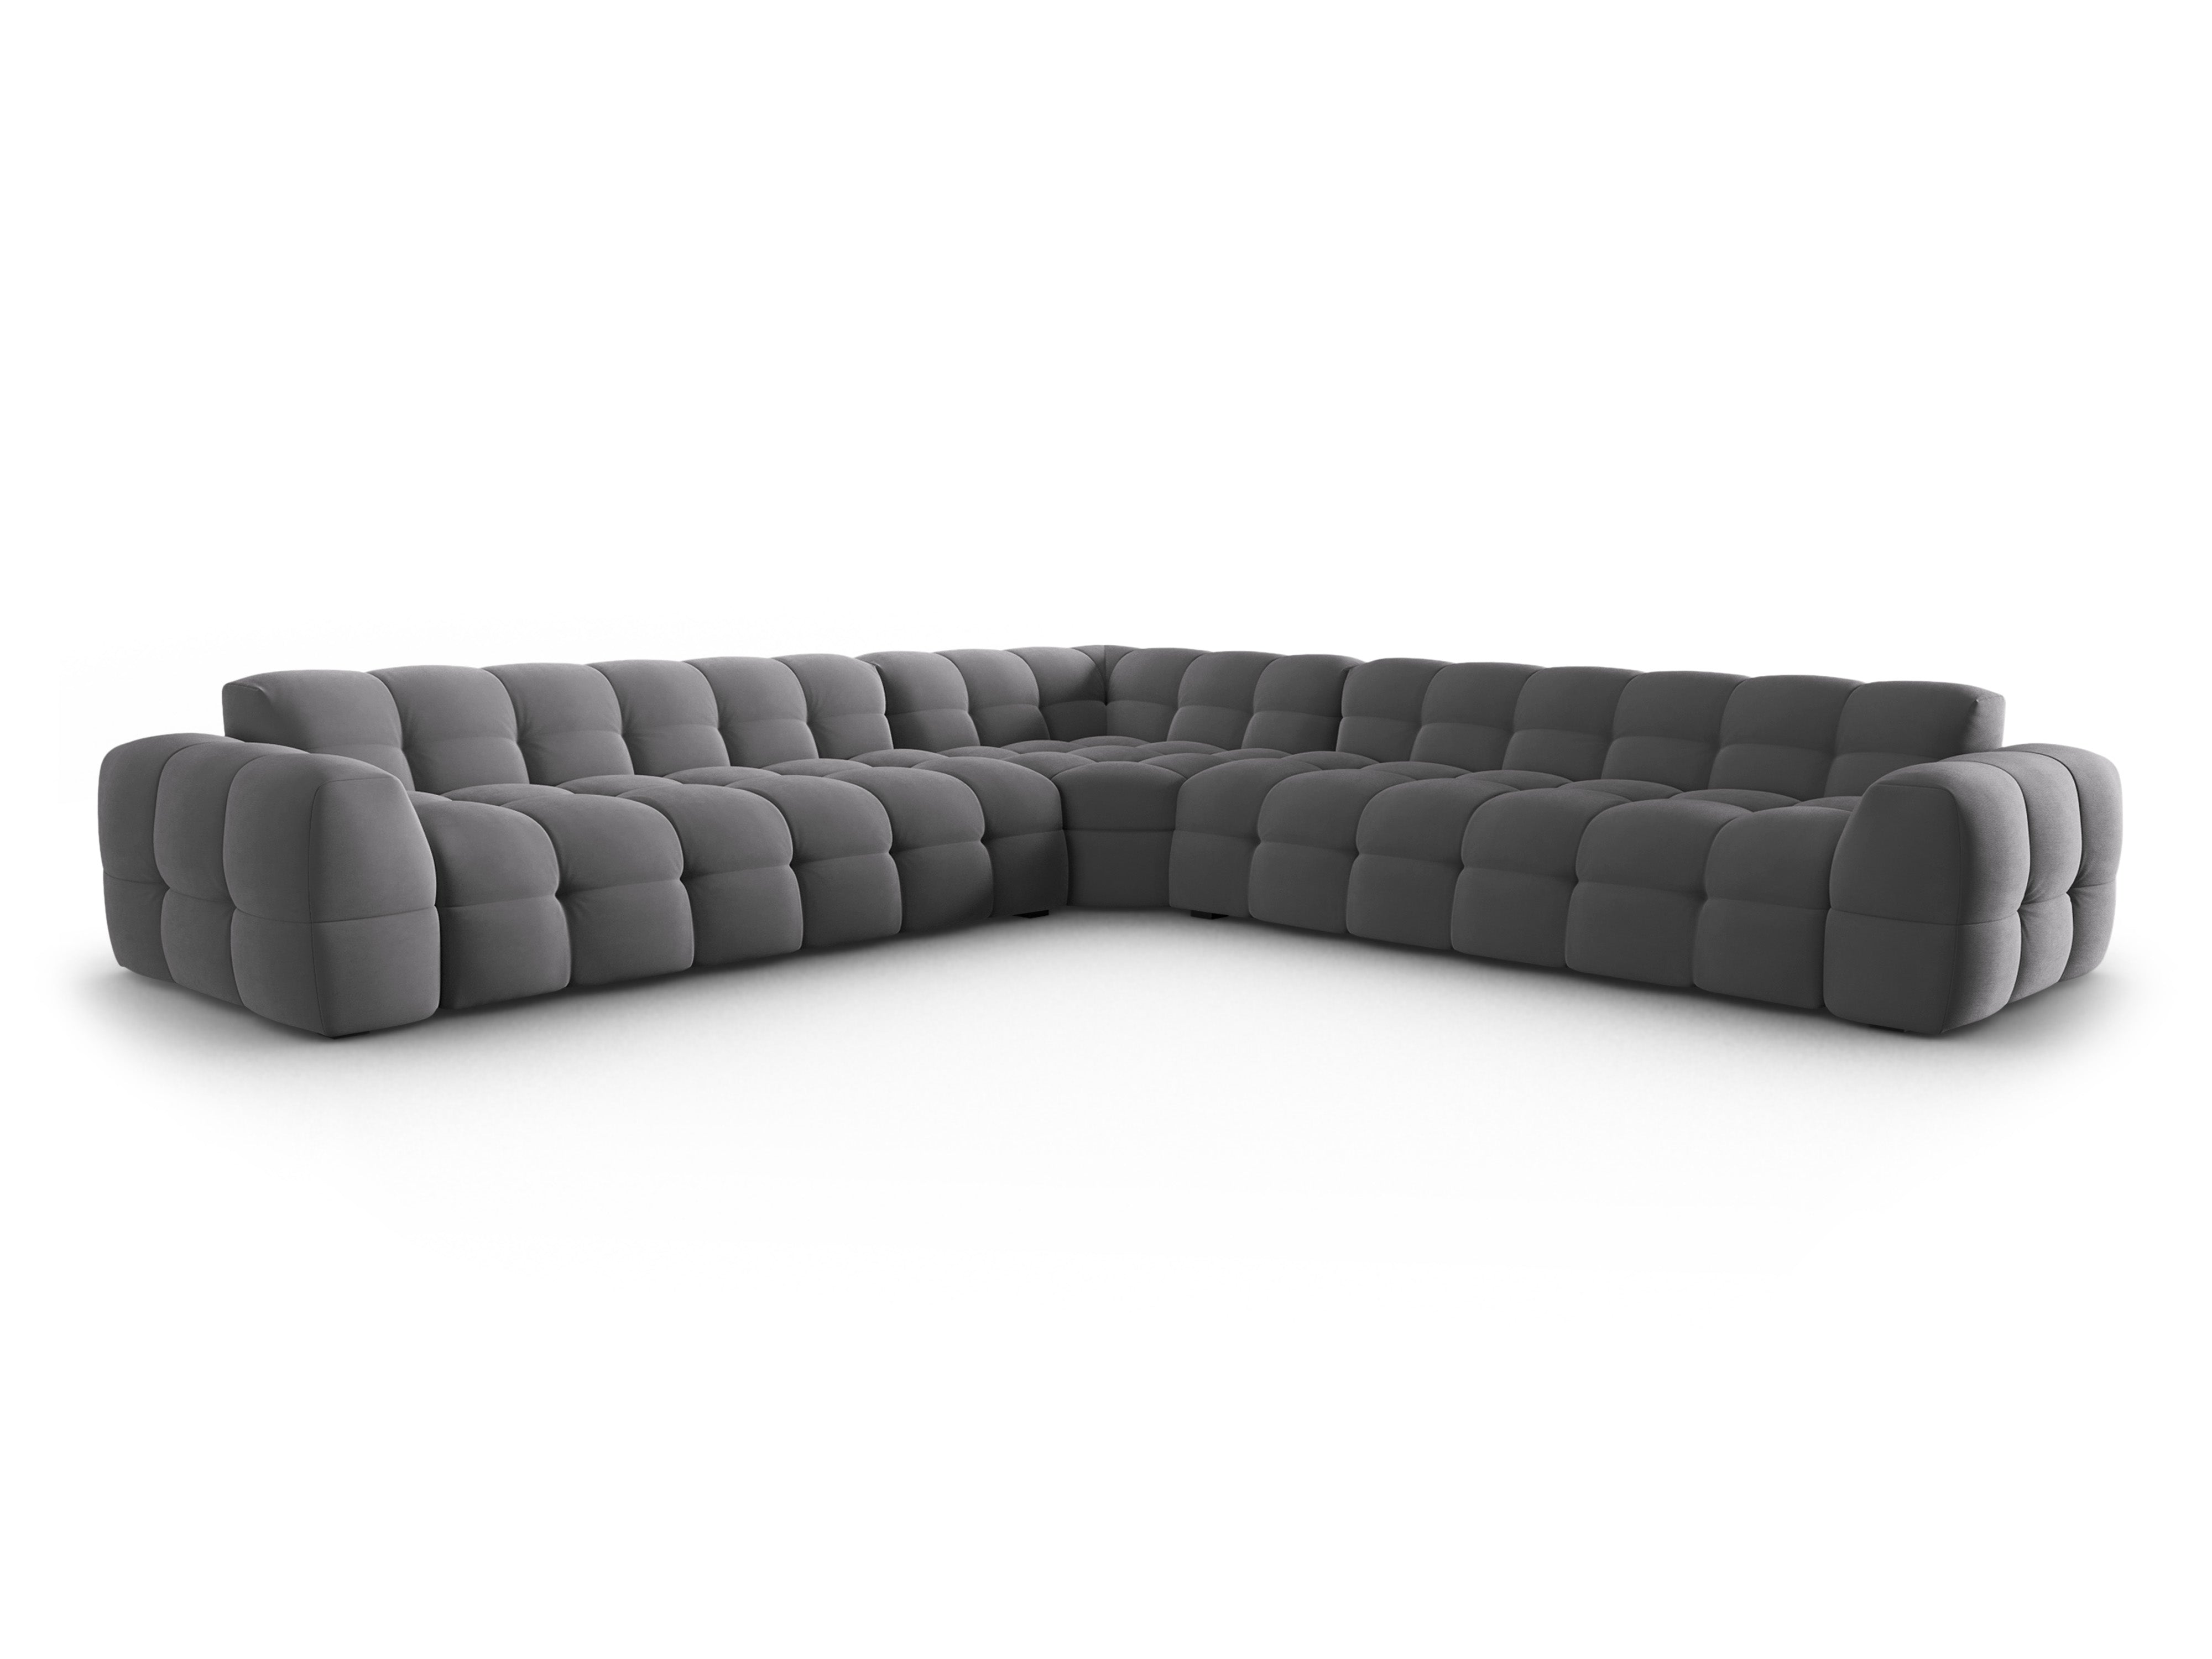 Velvet Symmetrical Corner Sofa, "Nino", 7 Seats, 322x322x68
Made in Europe, Maison Heritage, Eye on Design